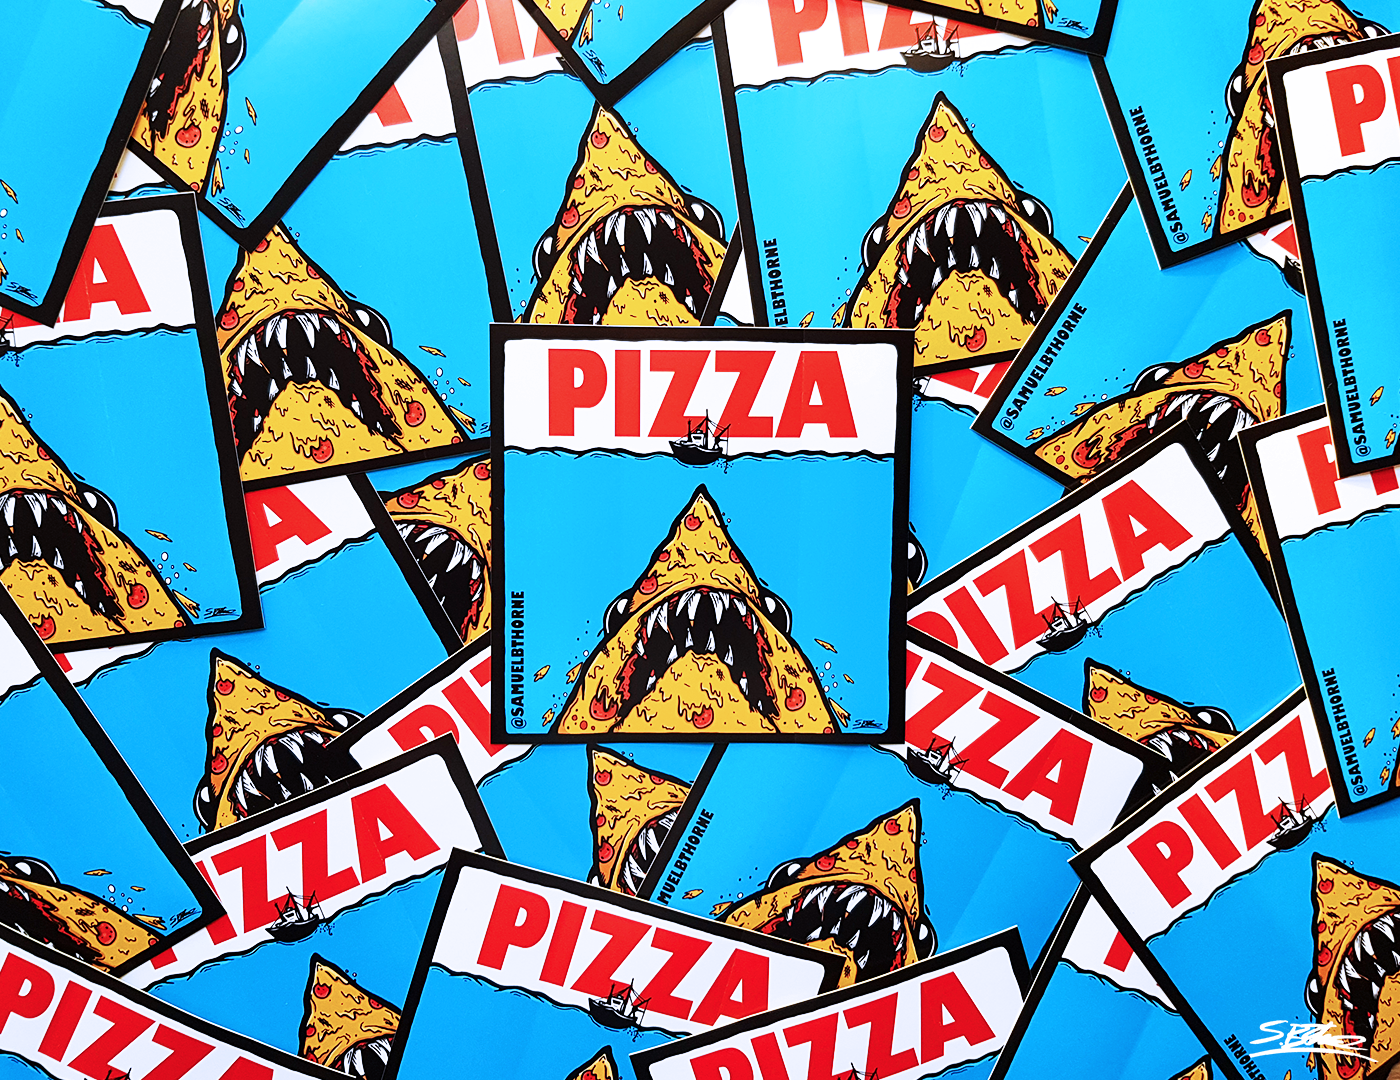 Pizza jaws shark Parody movie poster.